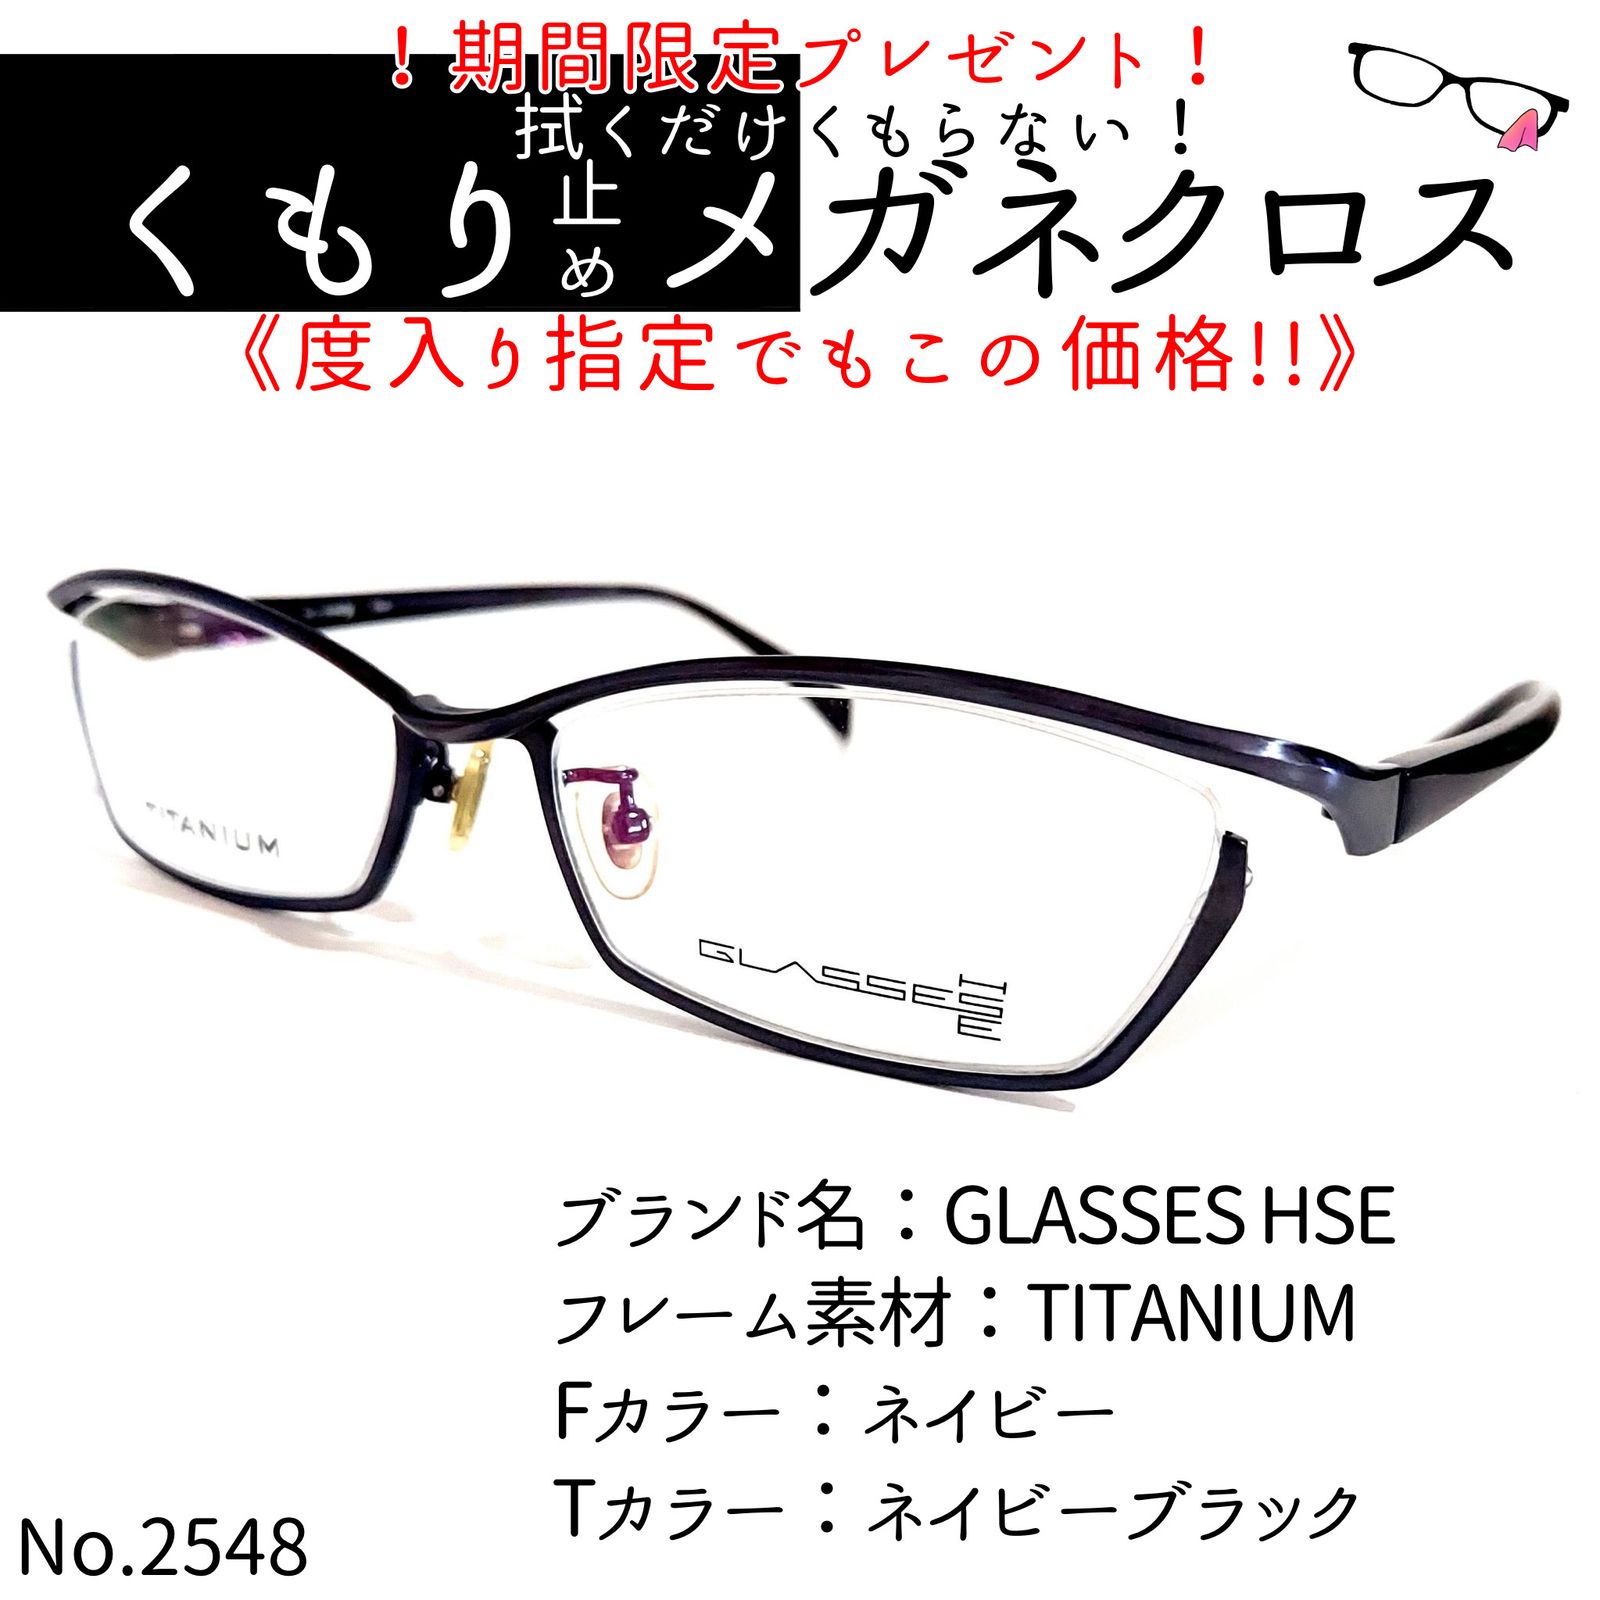 No.2548+メガネ GLASSES HSE【度数入り込み価格】 - スッキリ生活専門